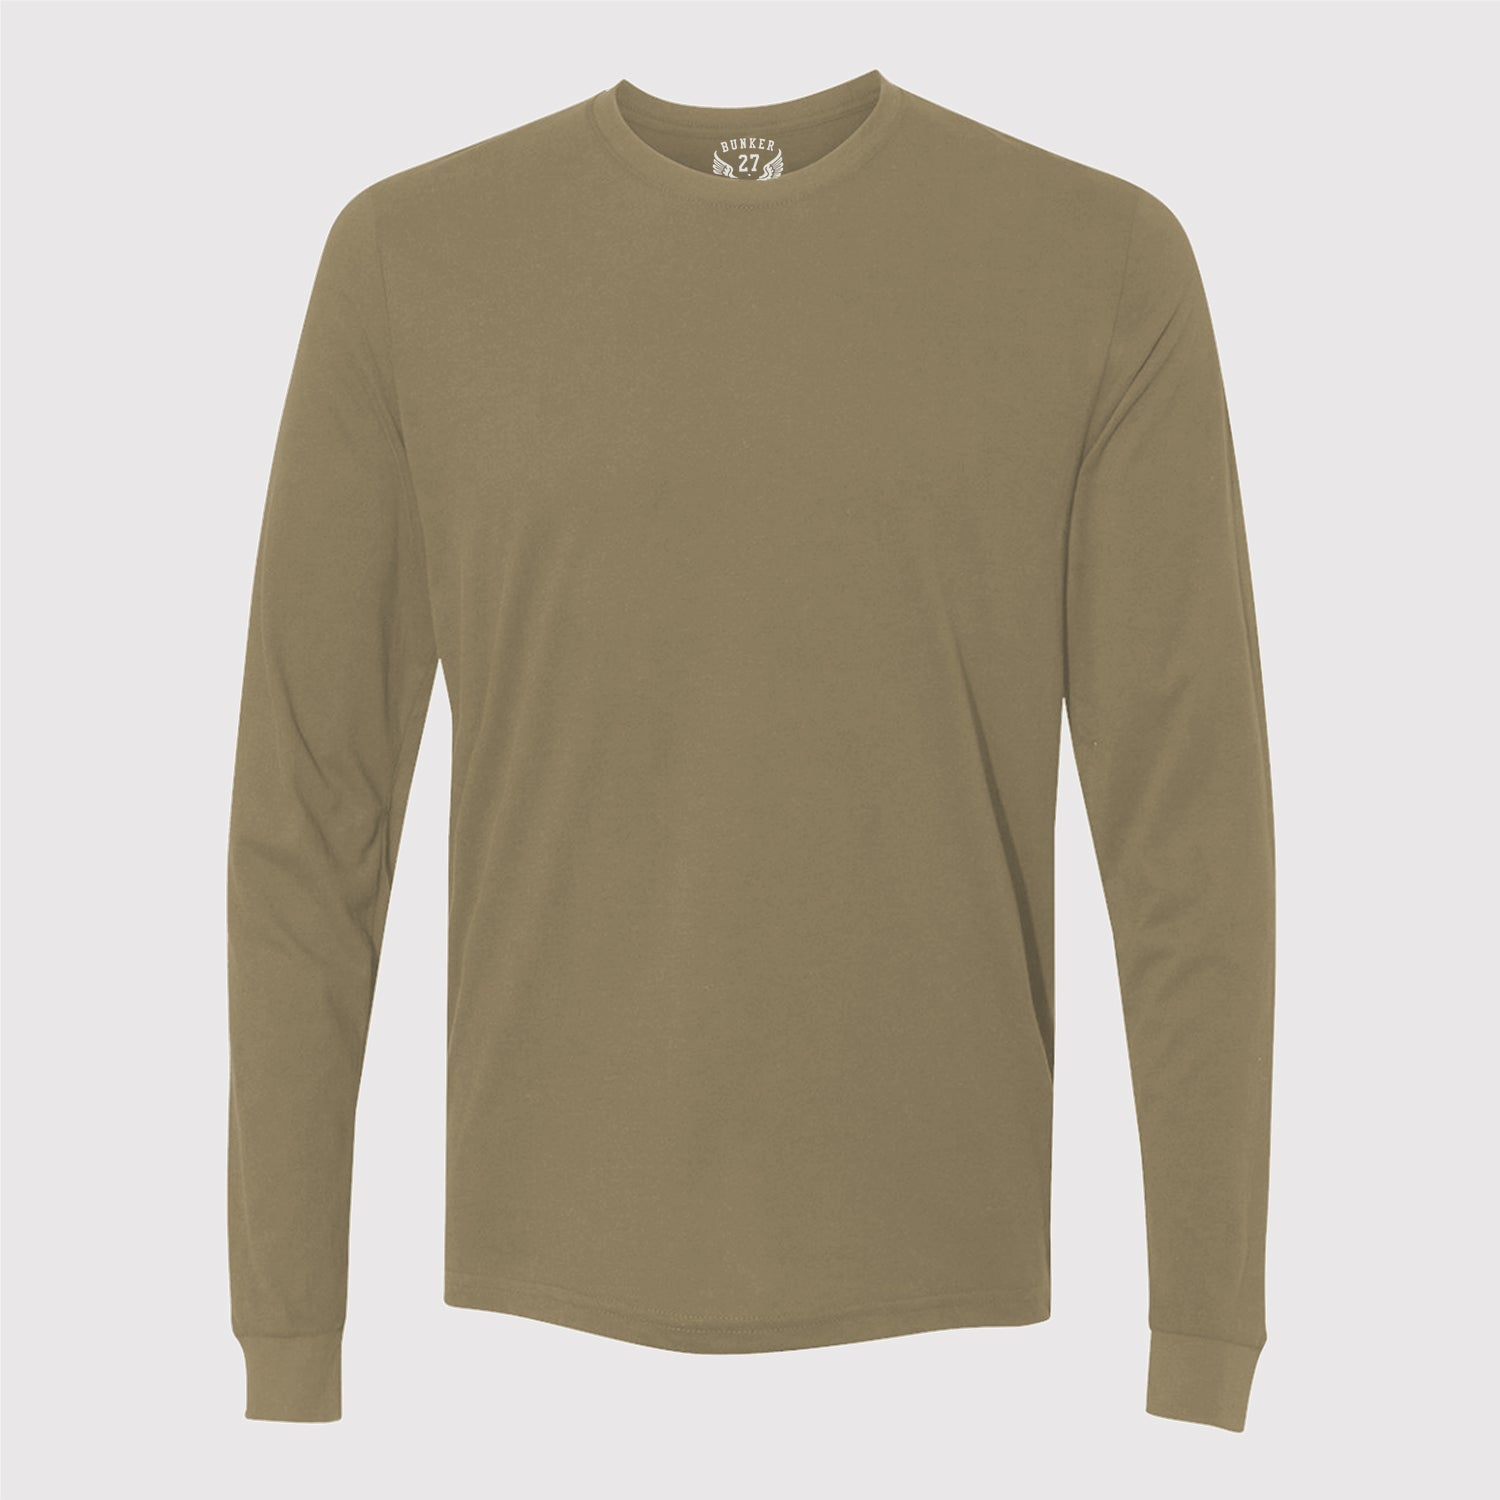 Coyote Brown Long Sleeve T-Shirt, AFI 36-2903  Tan 499